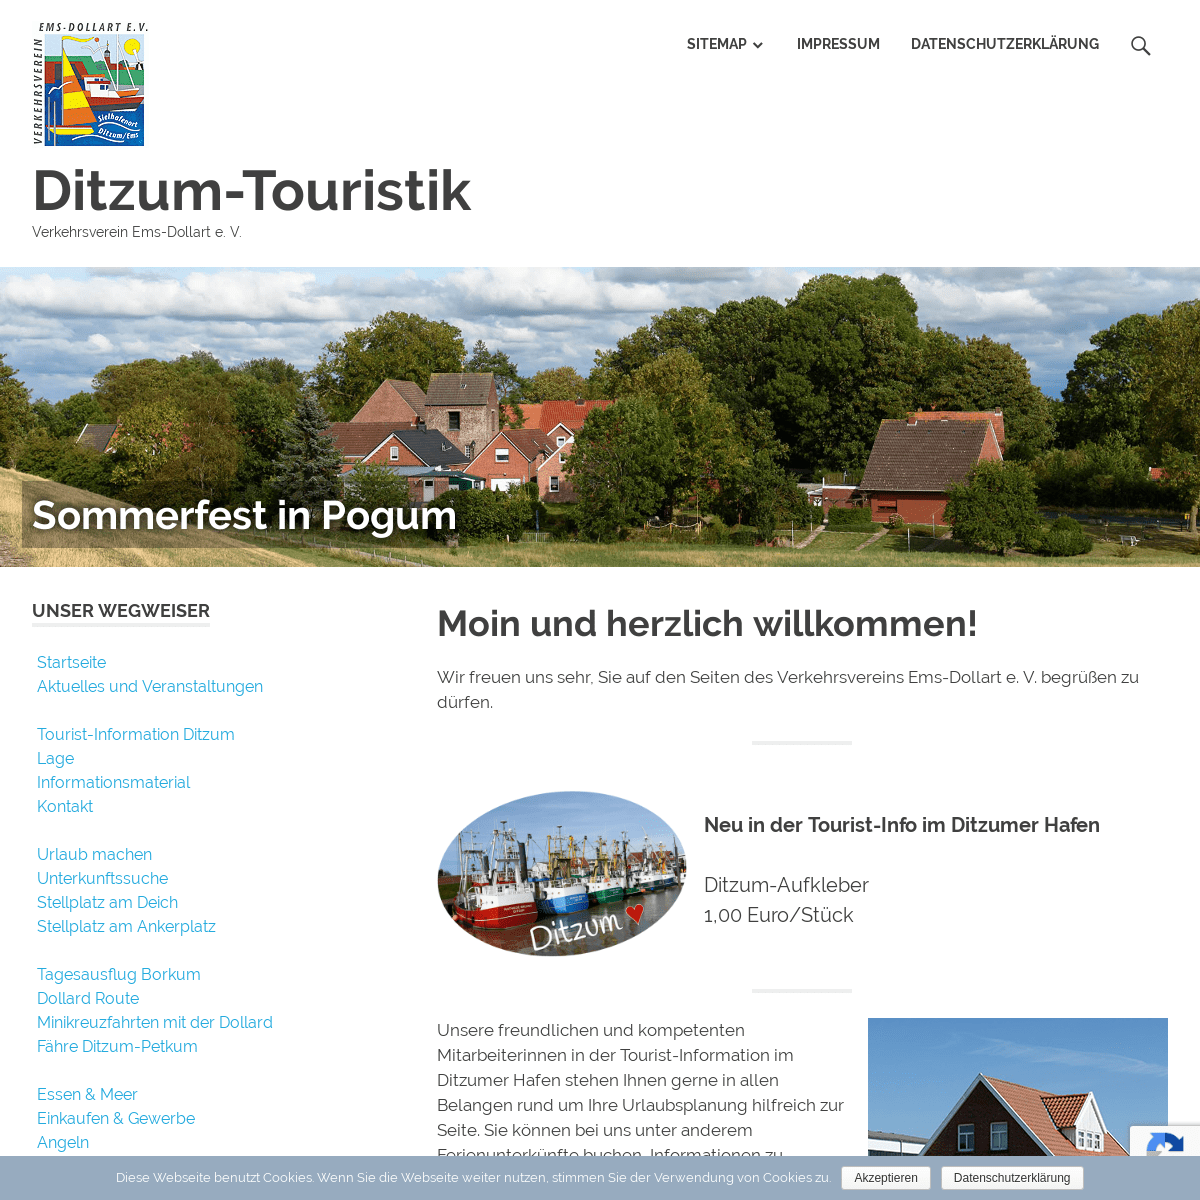 Ditzum-Touristik – Verkehrsverein Ems-Dollart e. V.